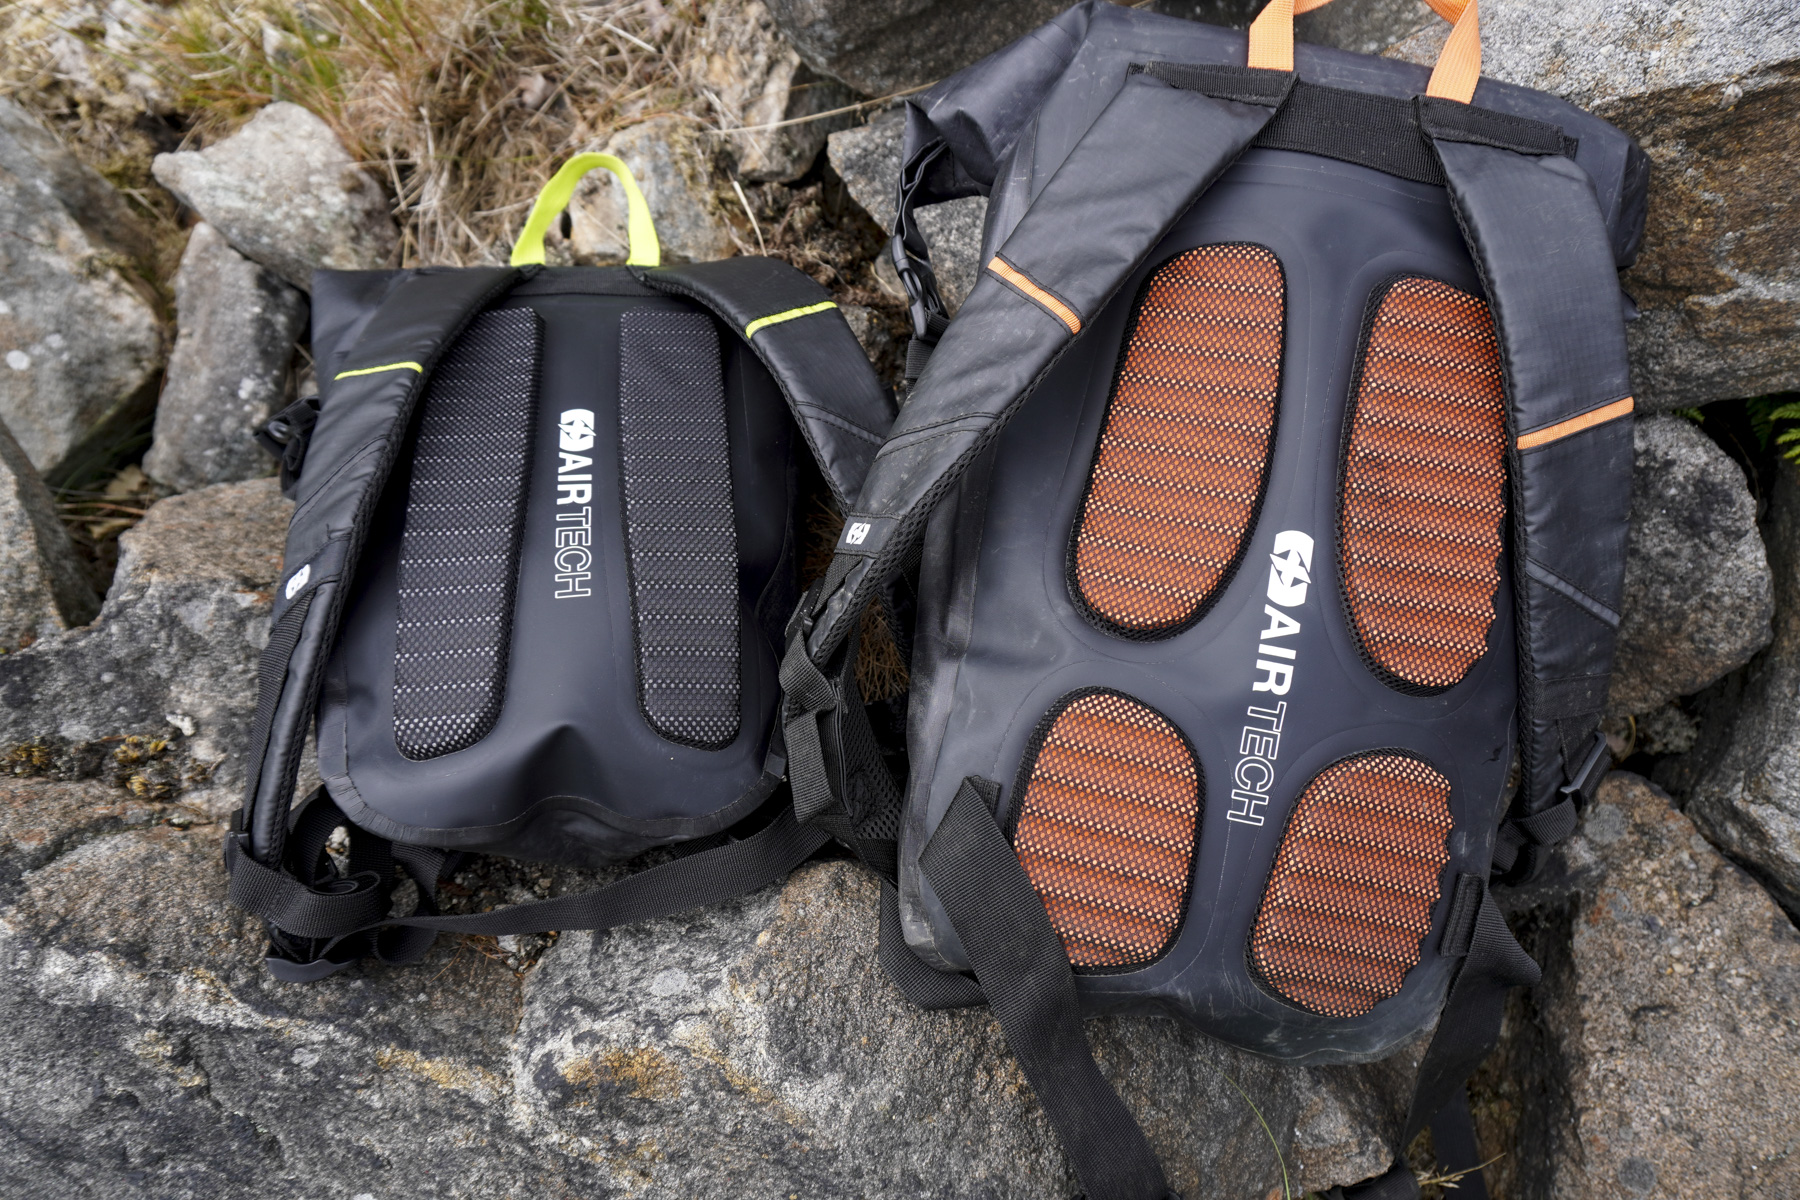 Oxford Aqua Evo Waterproof Backpacks - for wet commutes